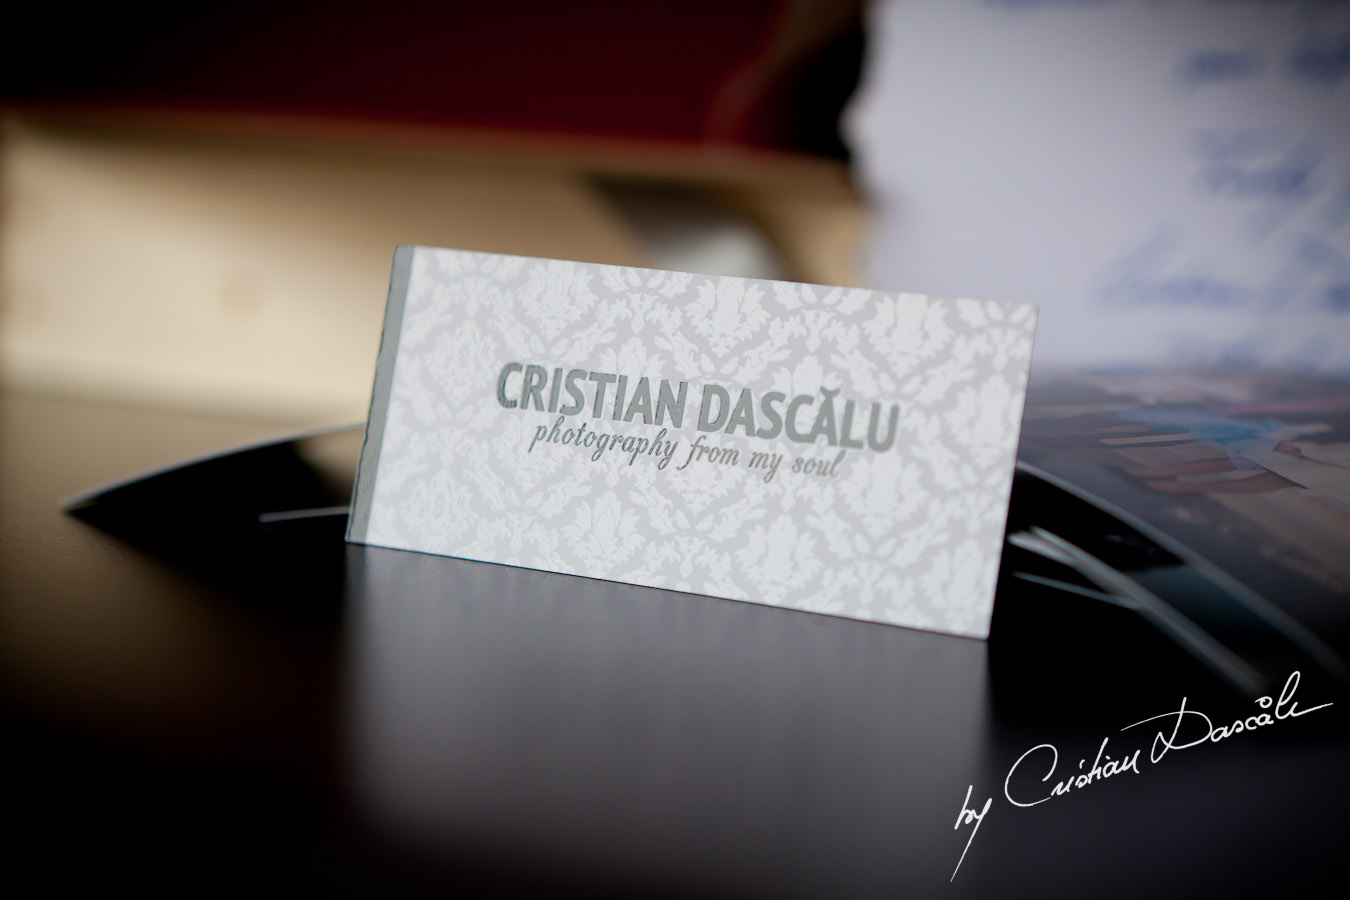 Cyprus Photographer Cristian Dascalu - Our custom packaging